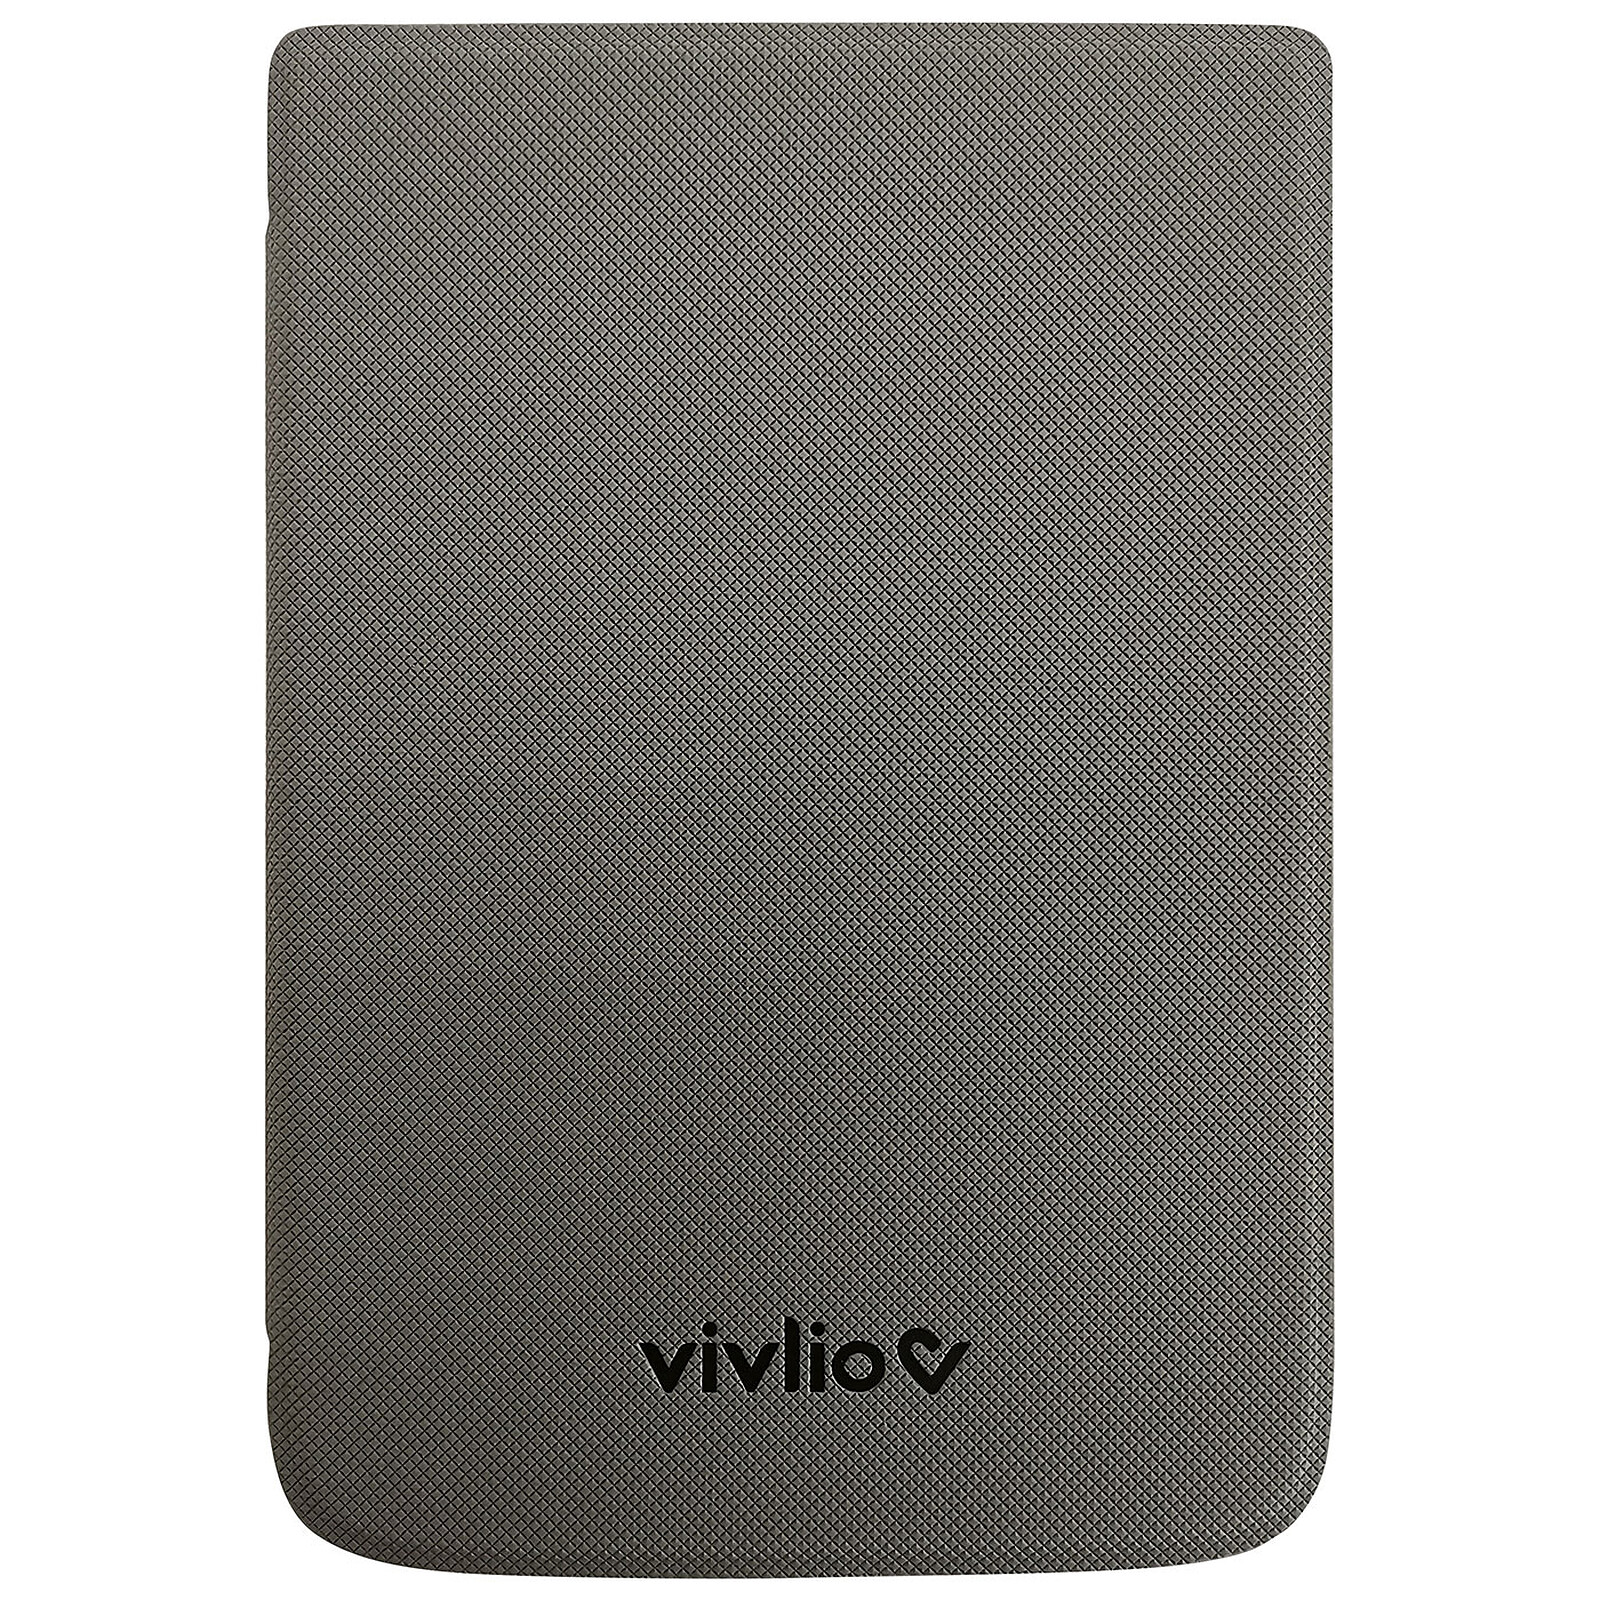 Vivlio Cover TL4/TL5/HD Grey - E-reader - LDLC 3-year warranty